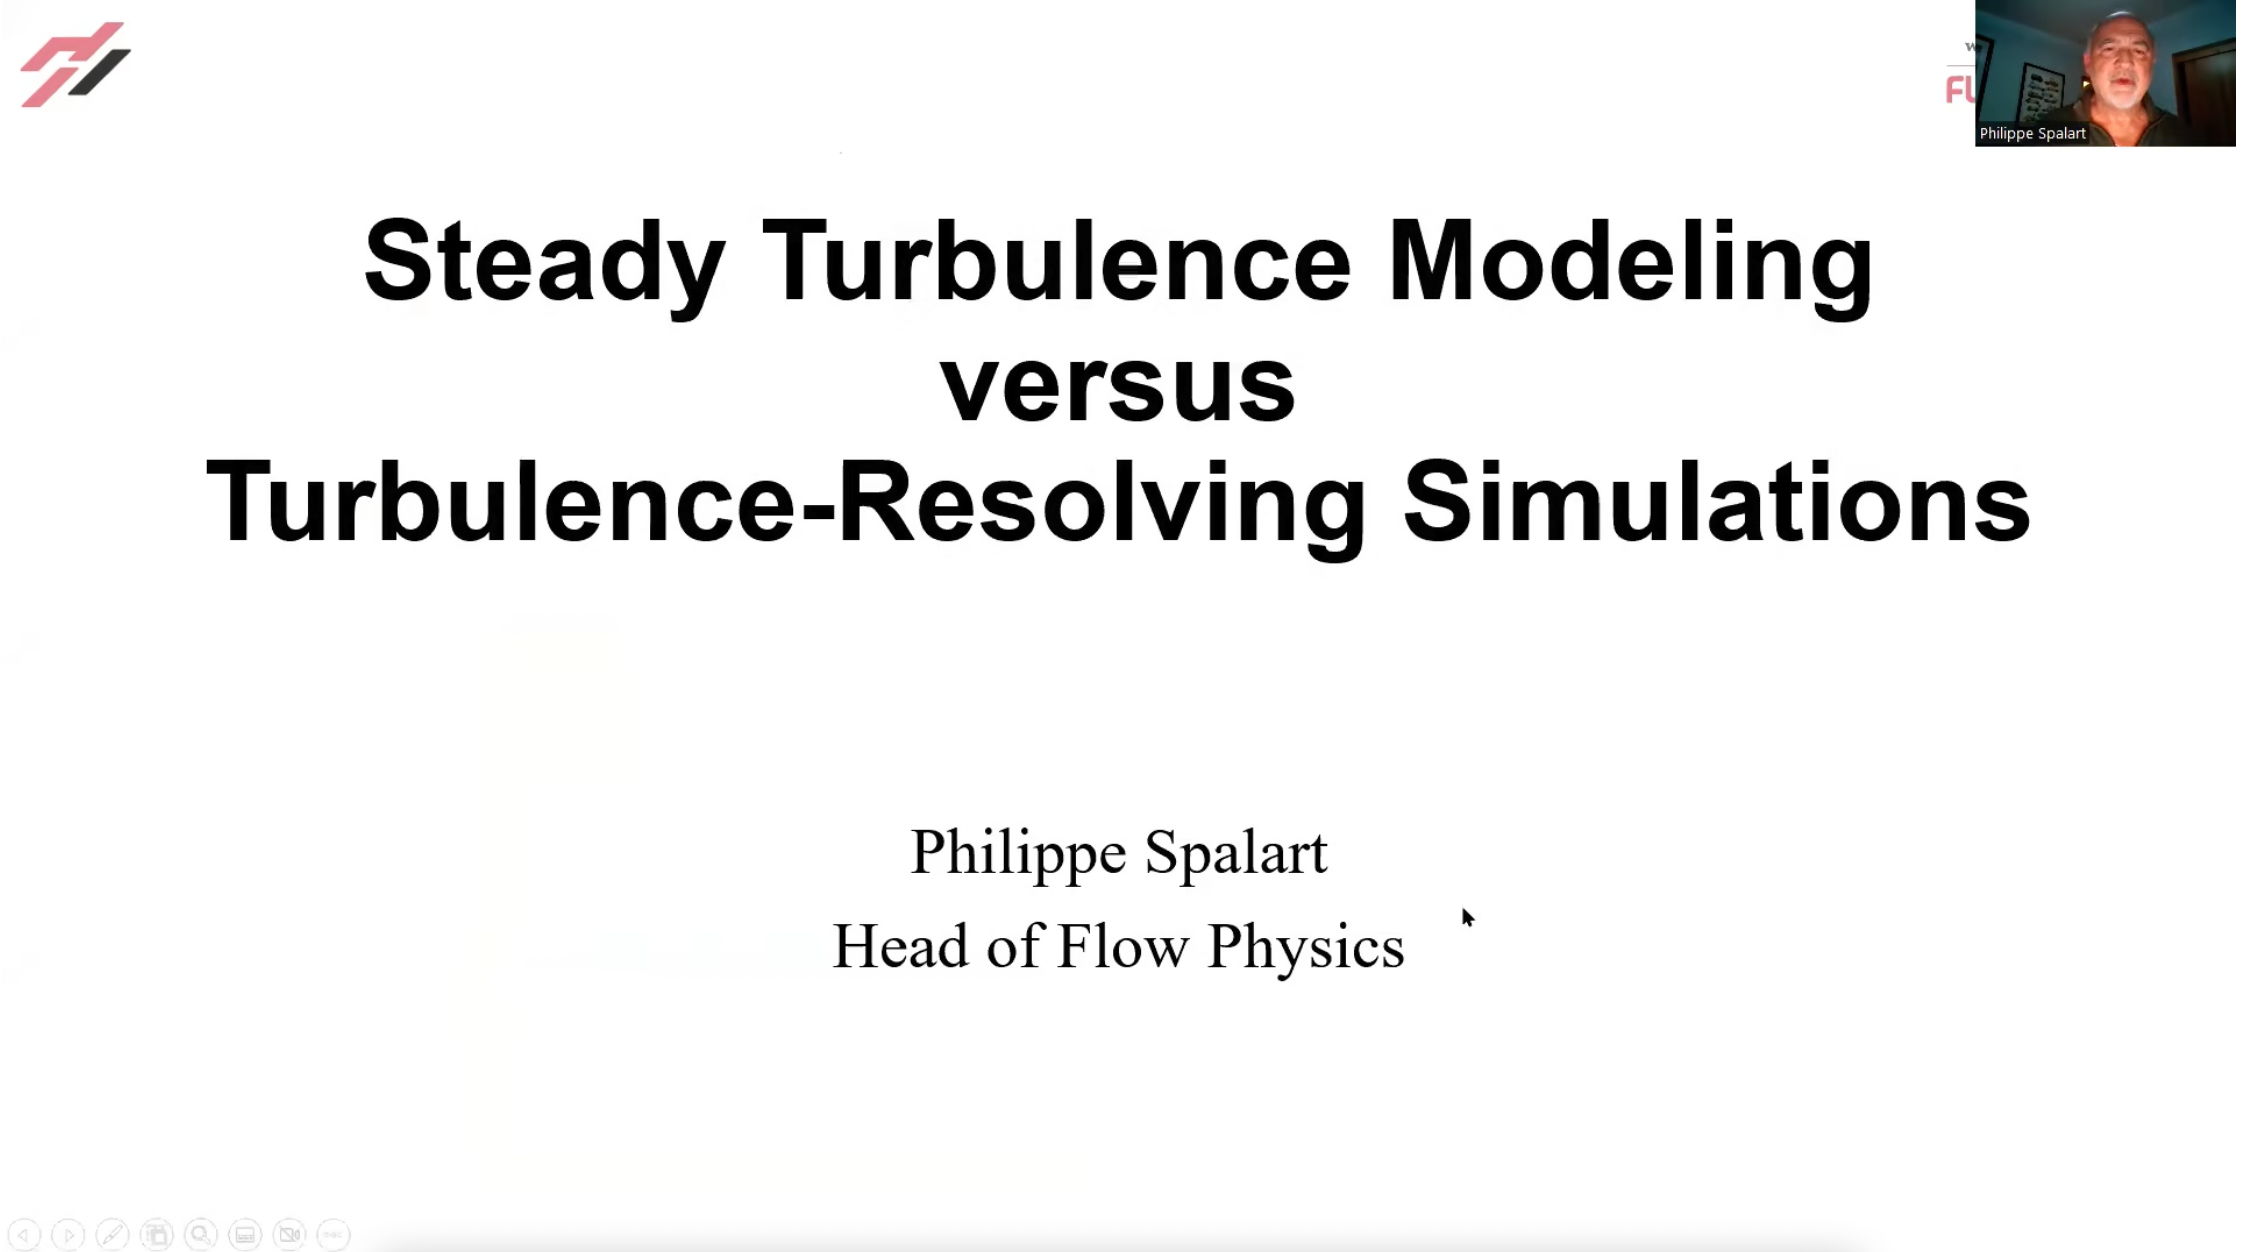 Lecture 5: Steady Turbulence vs. Turbulence-Resolving Simulations